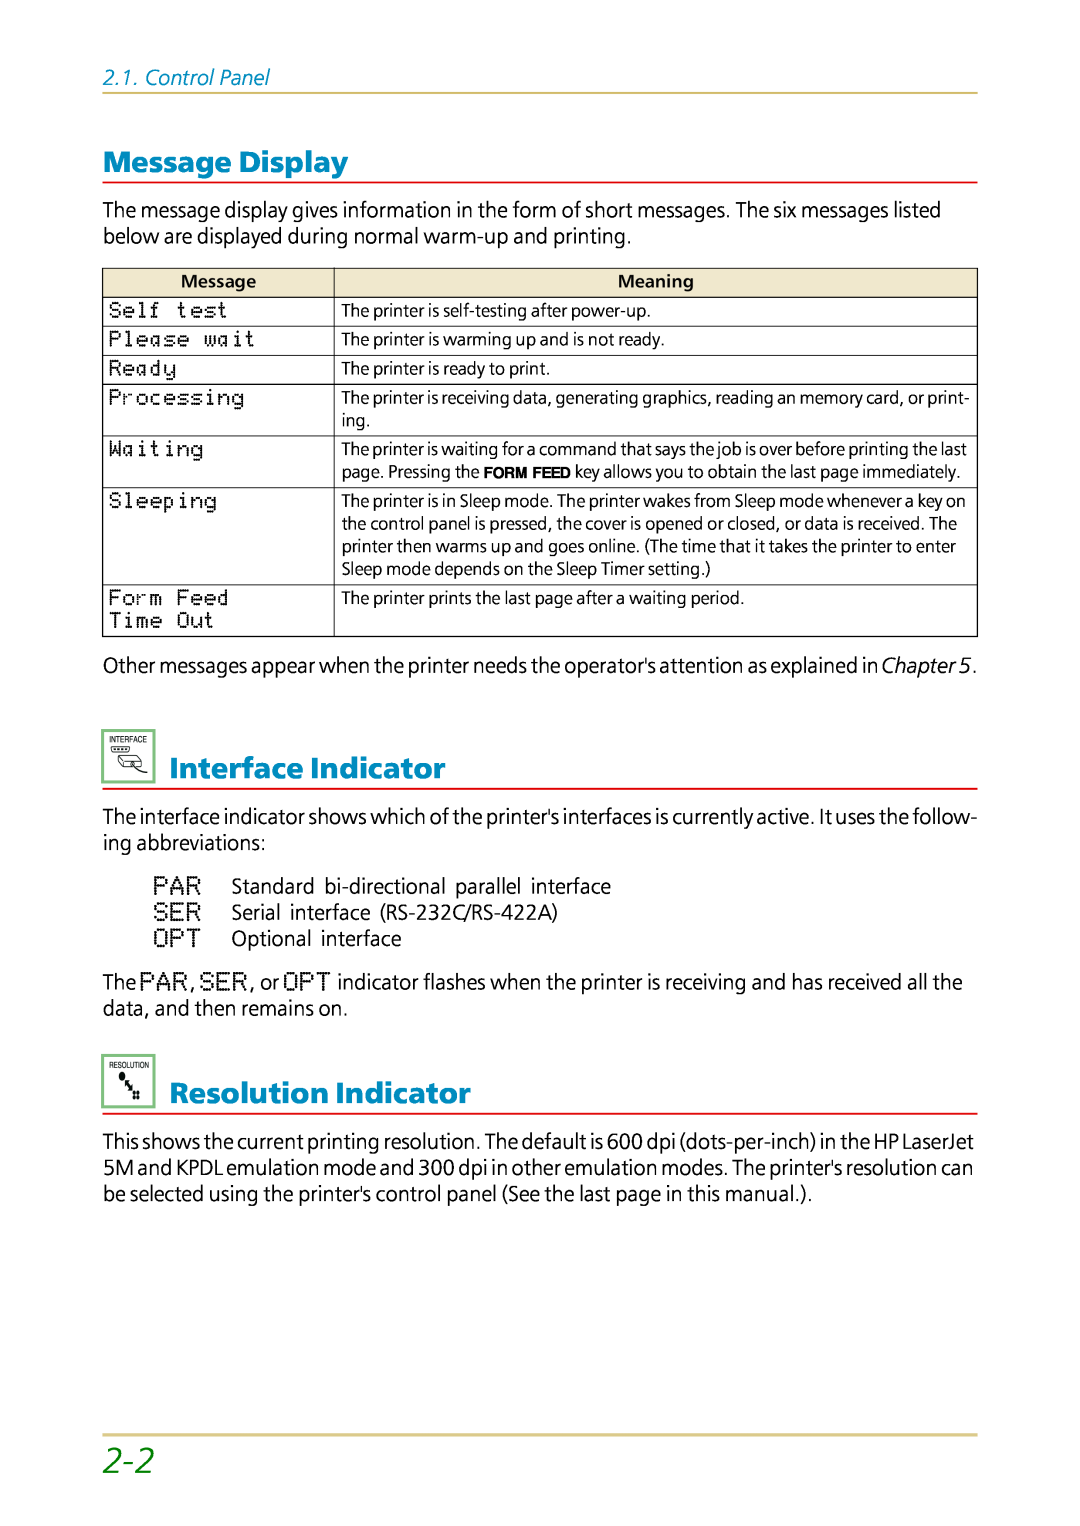 Kyocera FS-1700 user manual Message Display, Interface Indicator, Resolution Indicator, Control Panel 